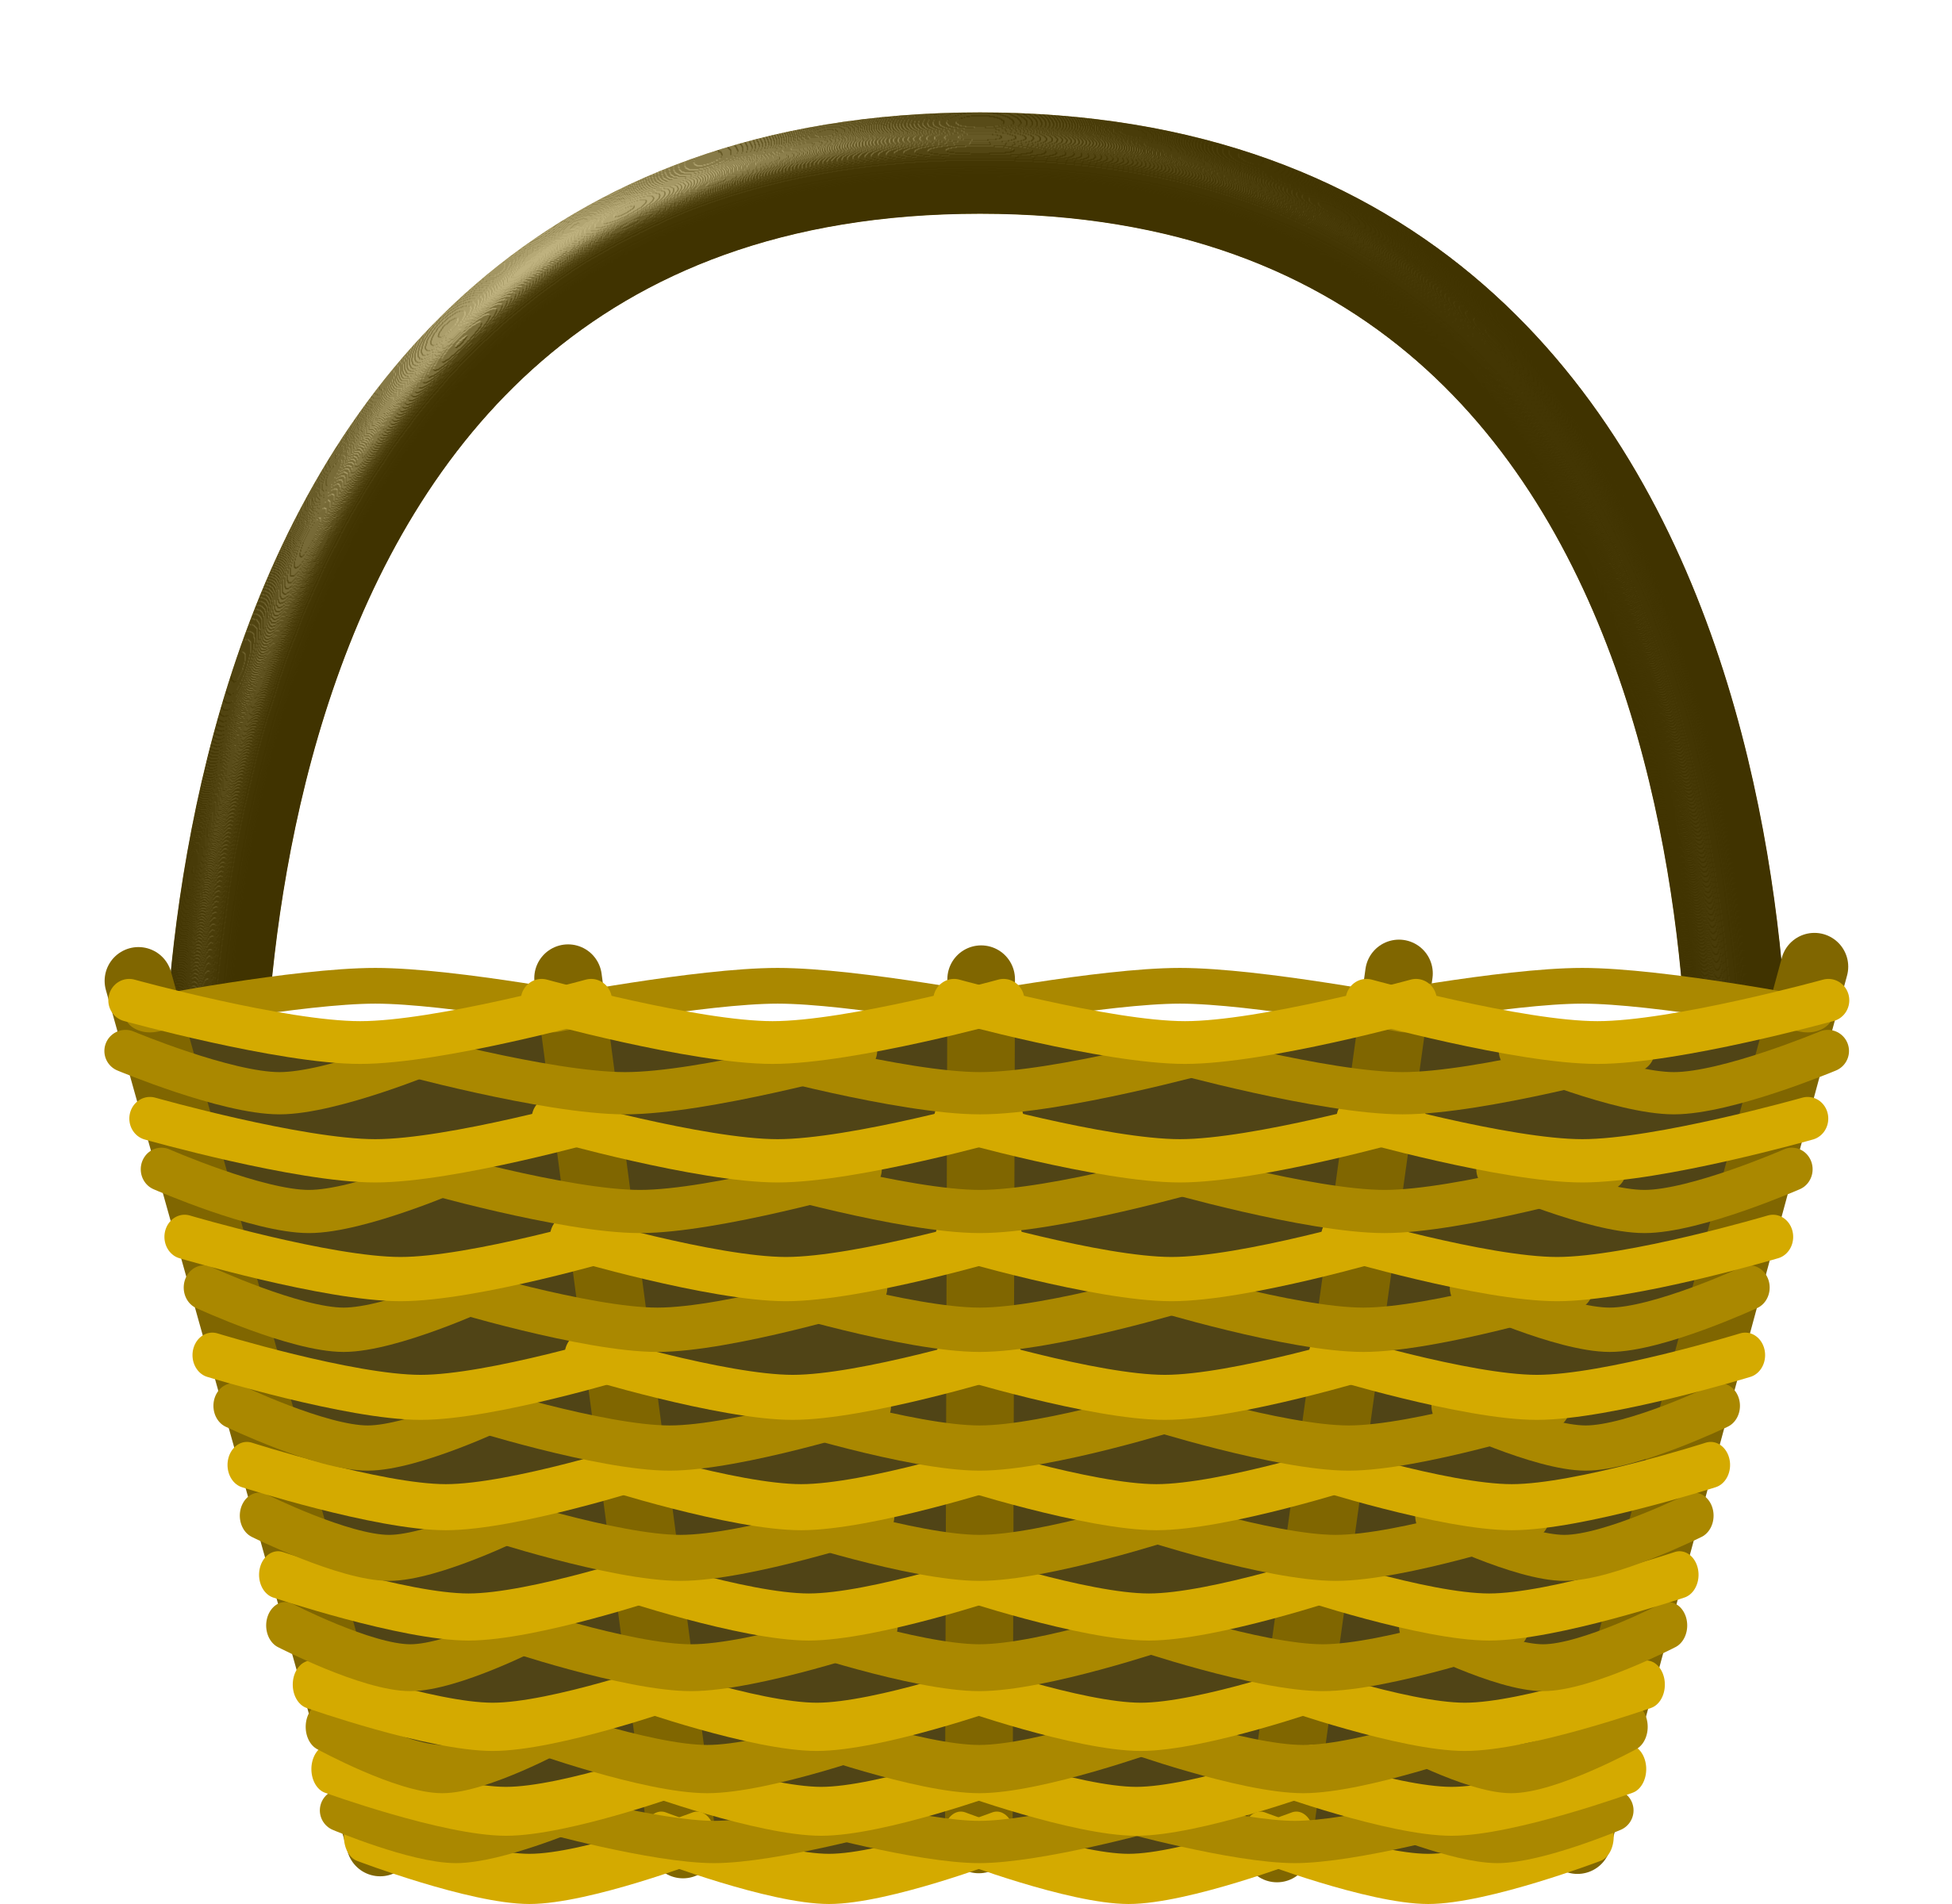 Empty bushel basket clipart k